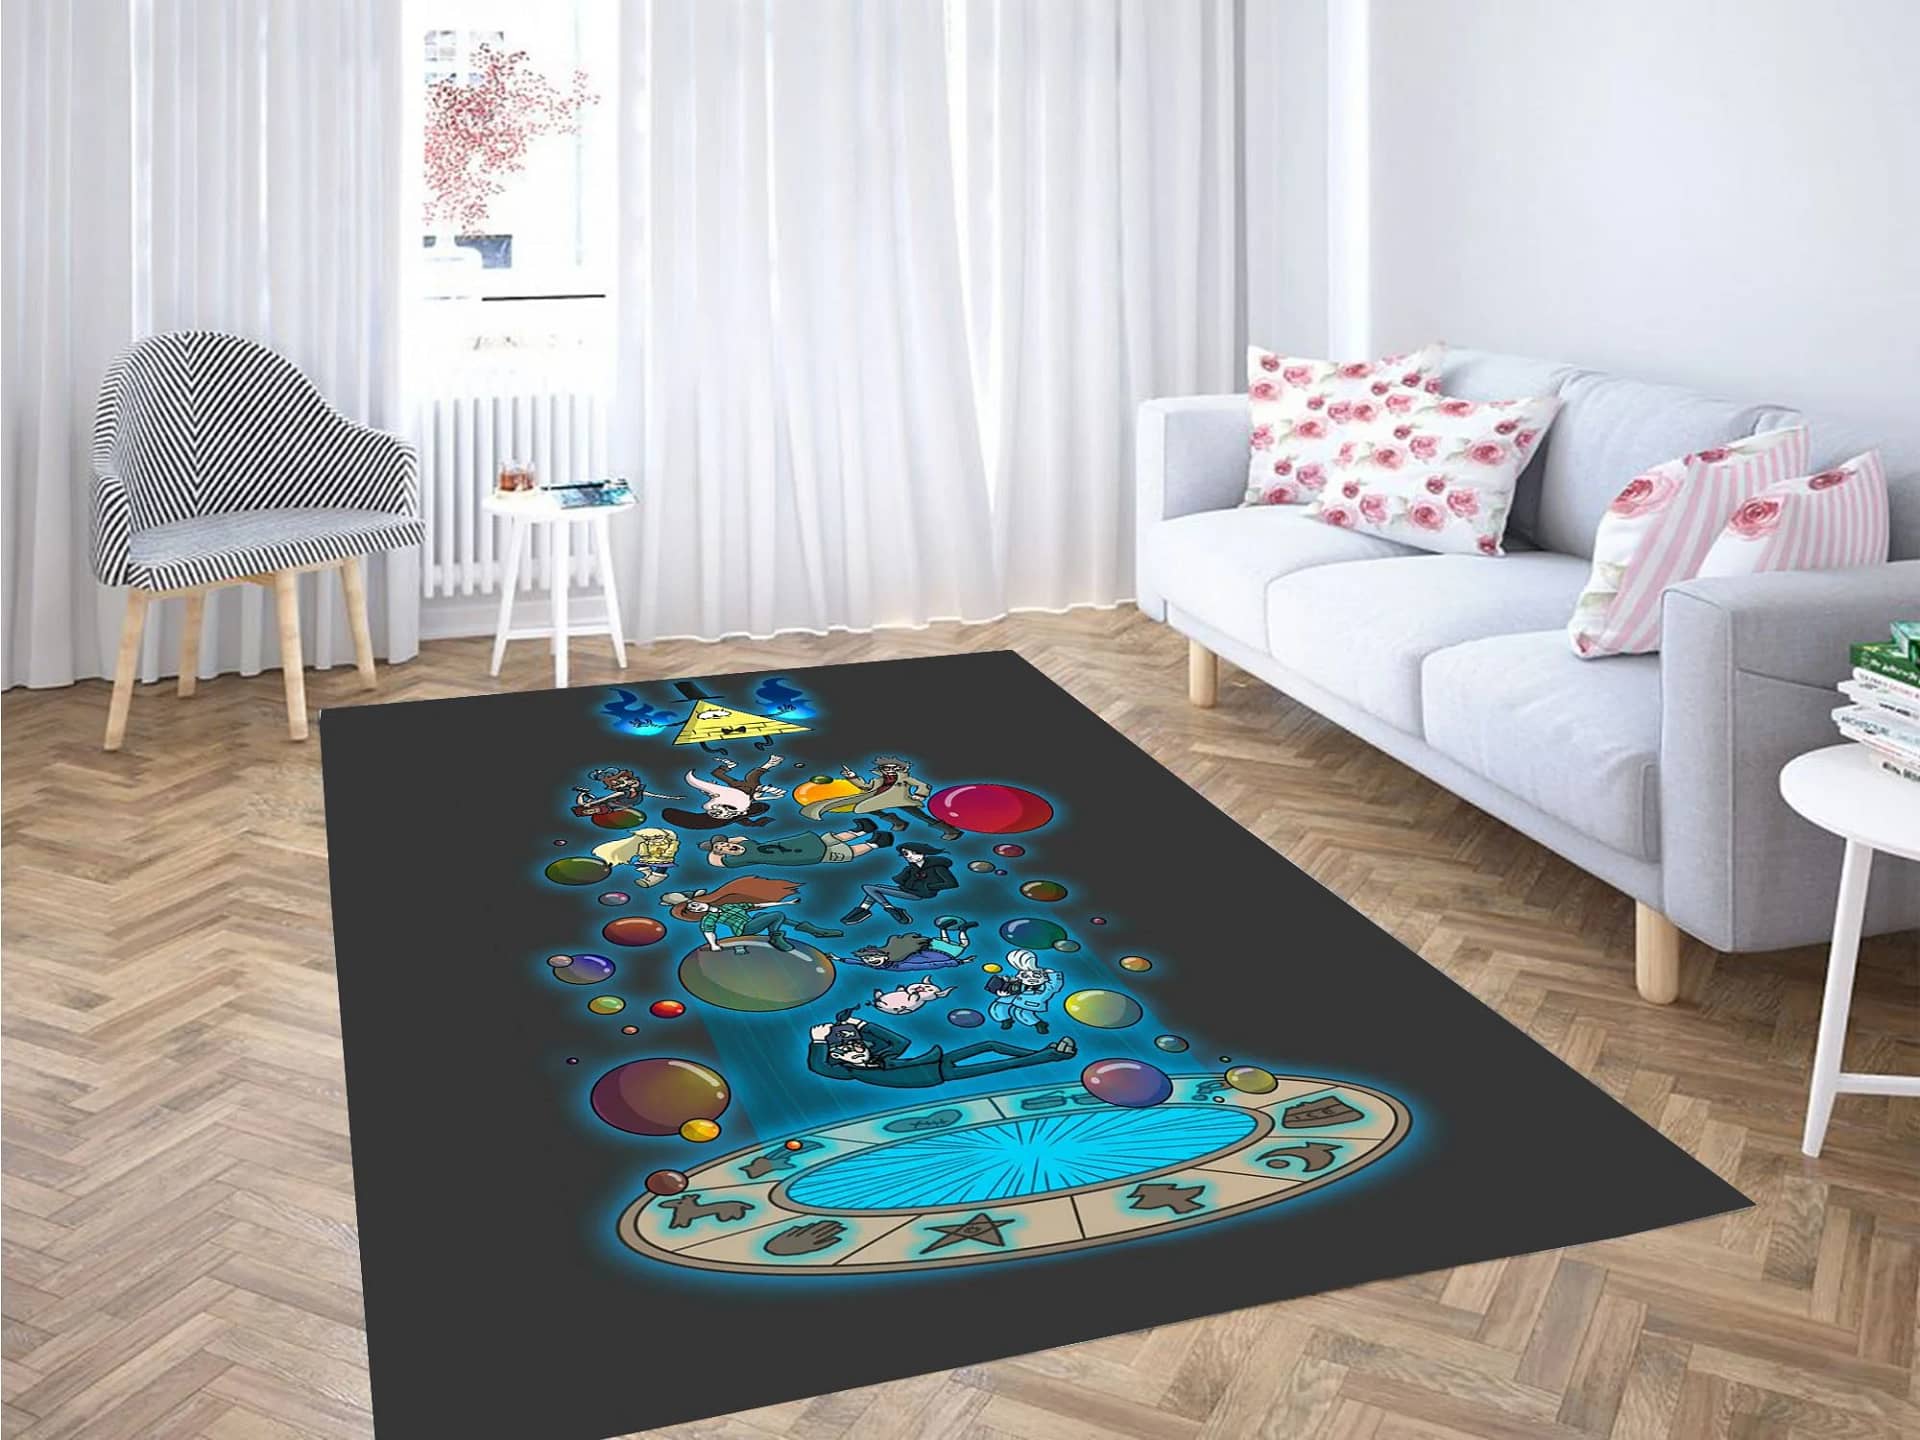 Cartoon Network Portal Carpet Rug